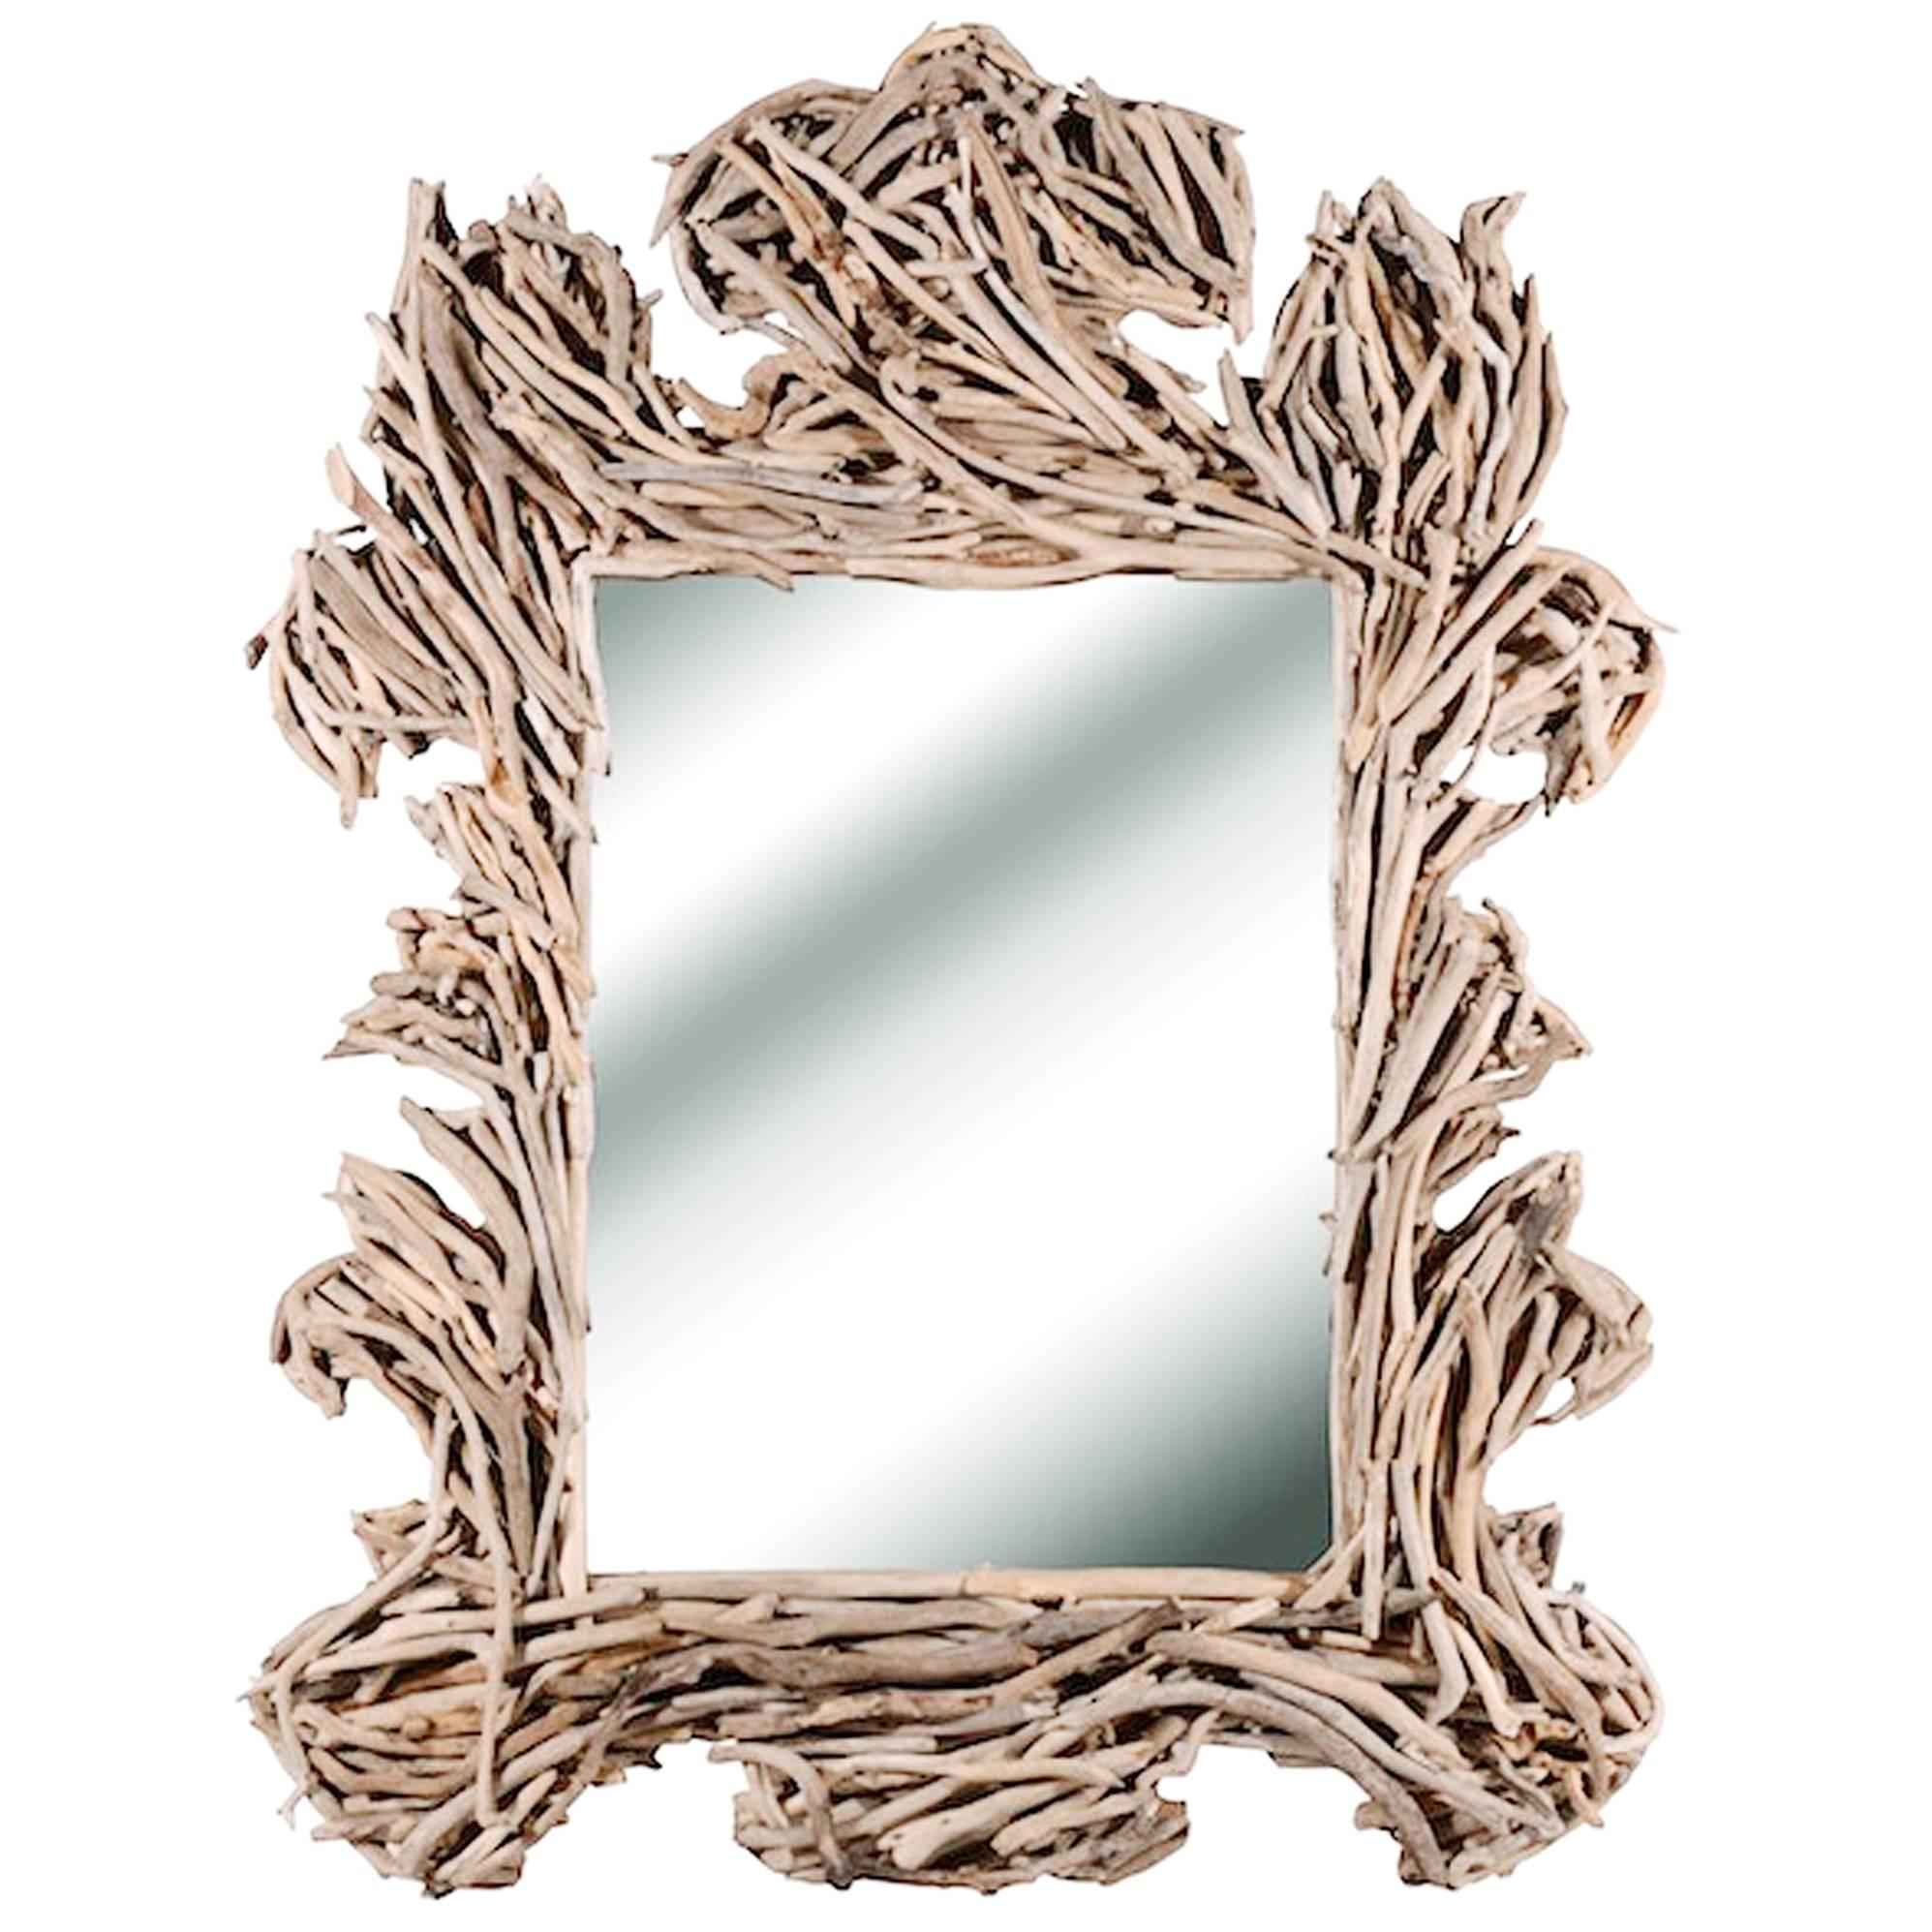 Firenze Mirror with Driftwood